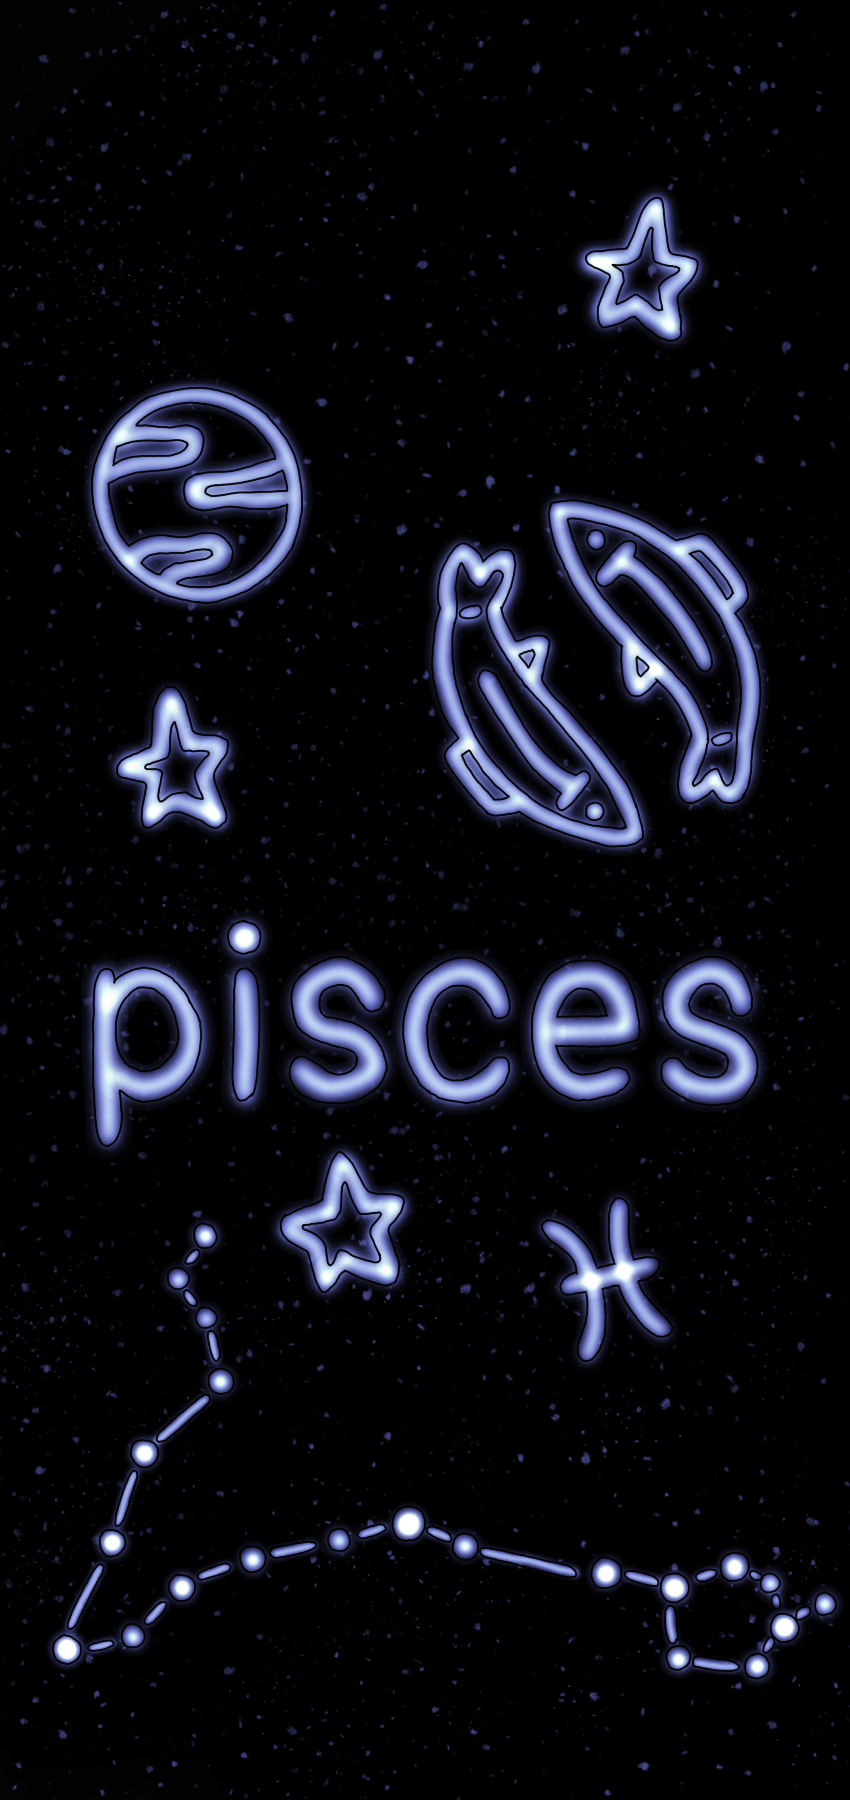 Pisces Wallpapers